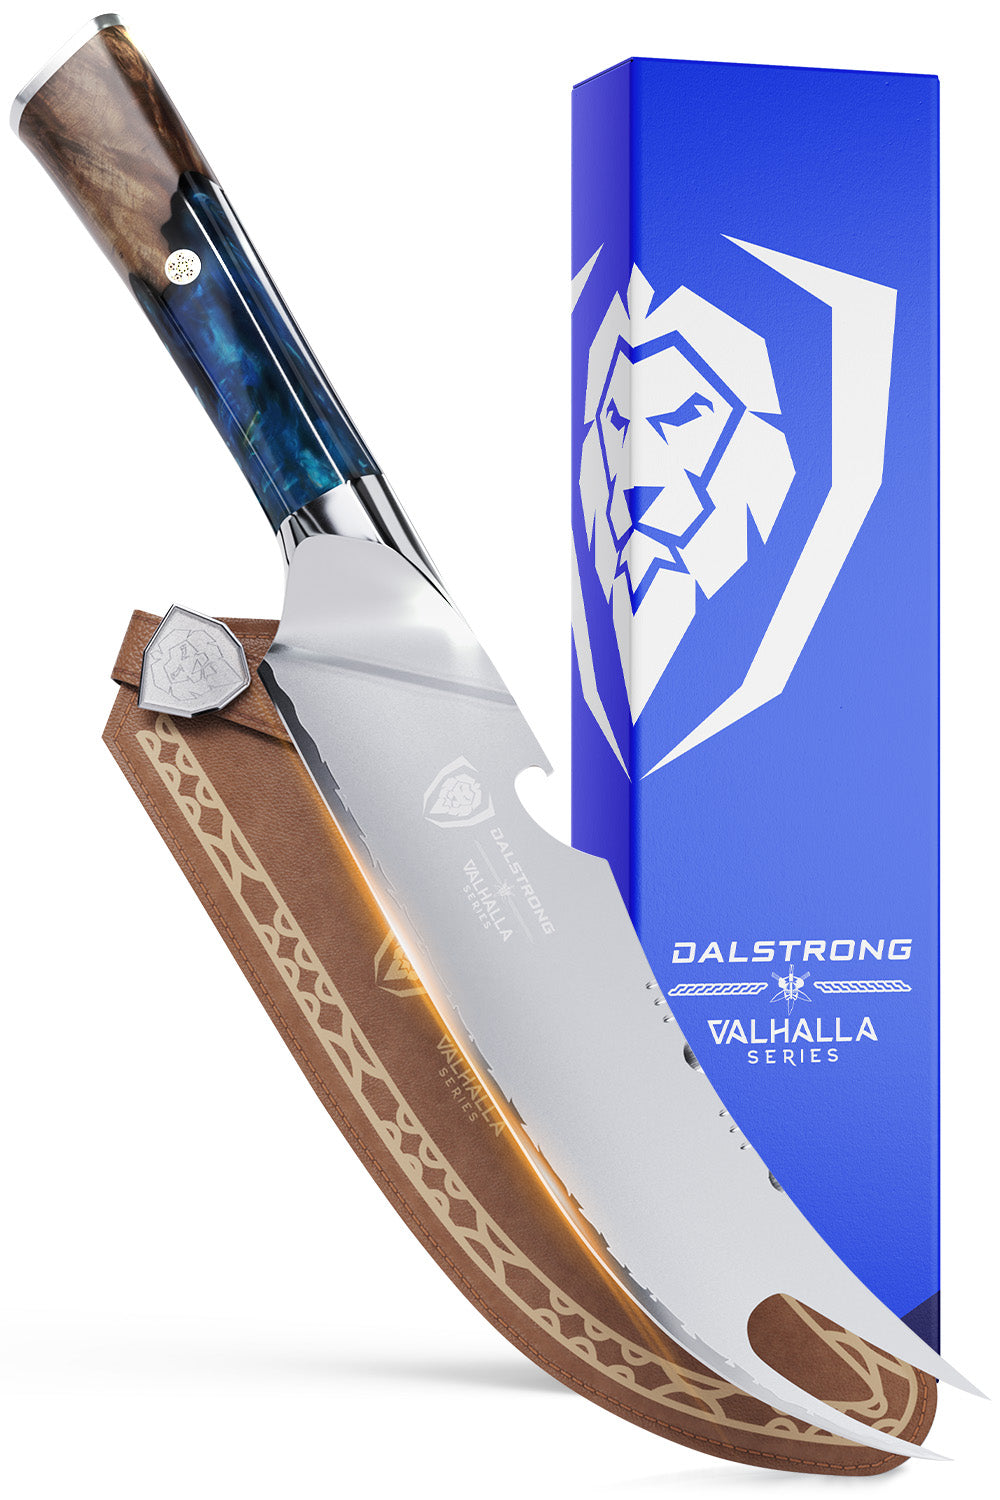 Pitmaster Knife 8" | Forked Tip & Bottle Opener | Valhalla Series | Dalstrong ©